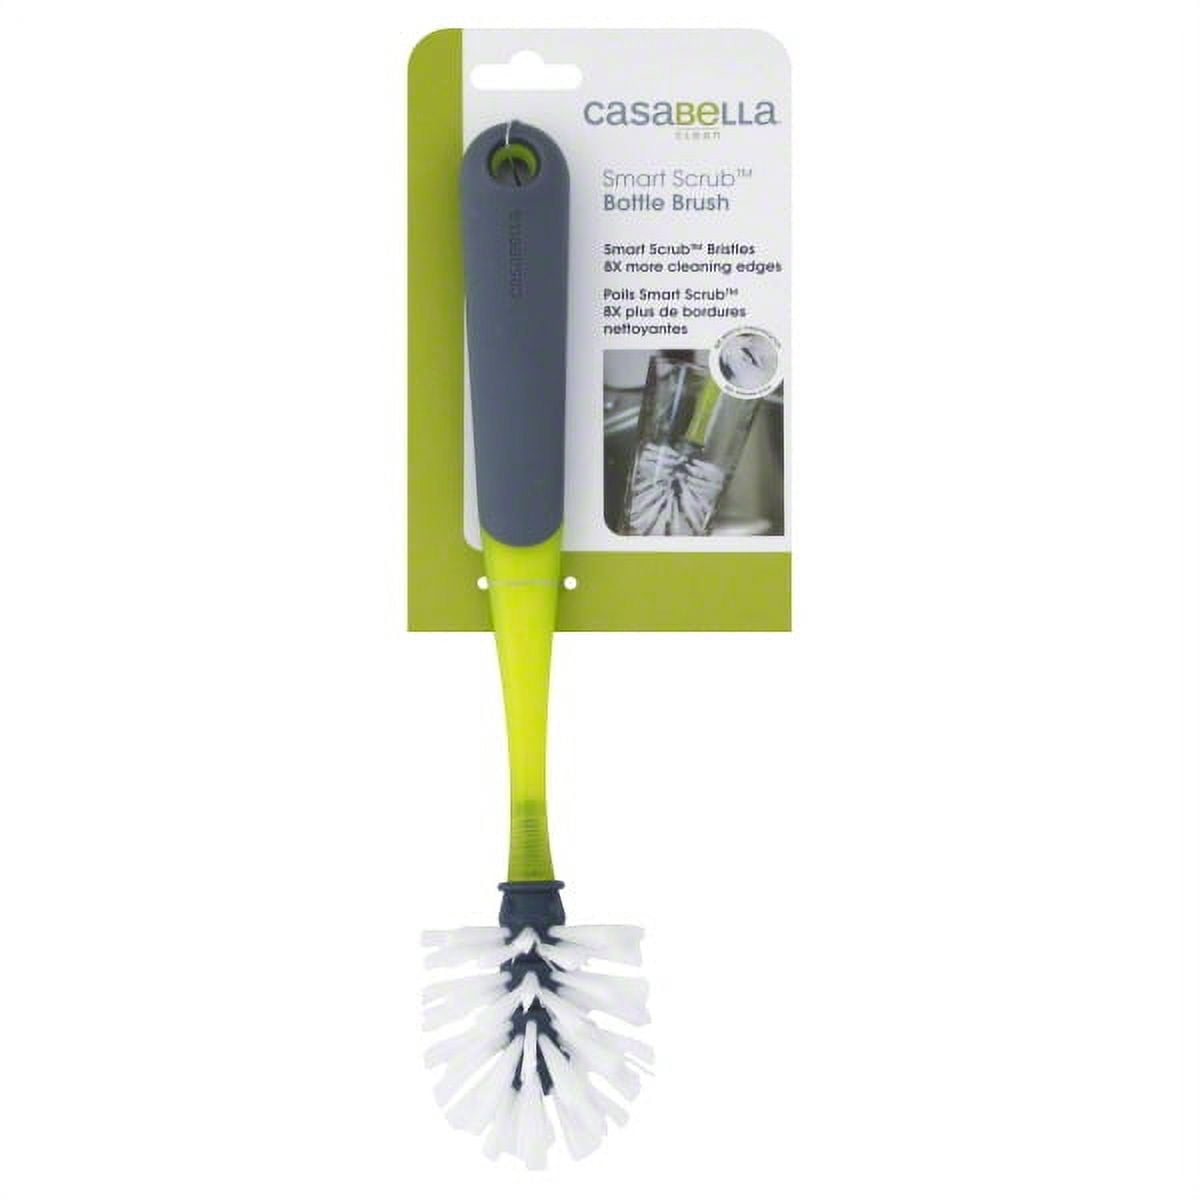 NOS Casabella Smart Scrub Soap Dispensing Dish Brush Refills 16927 5 Packs  Of 2